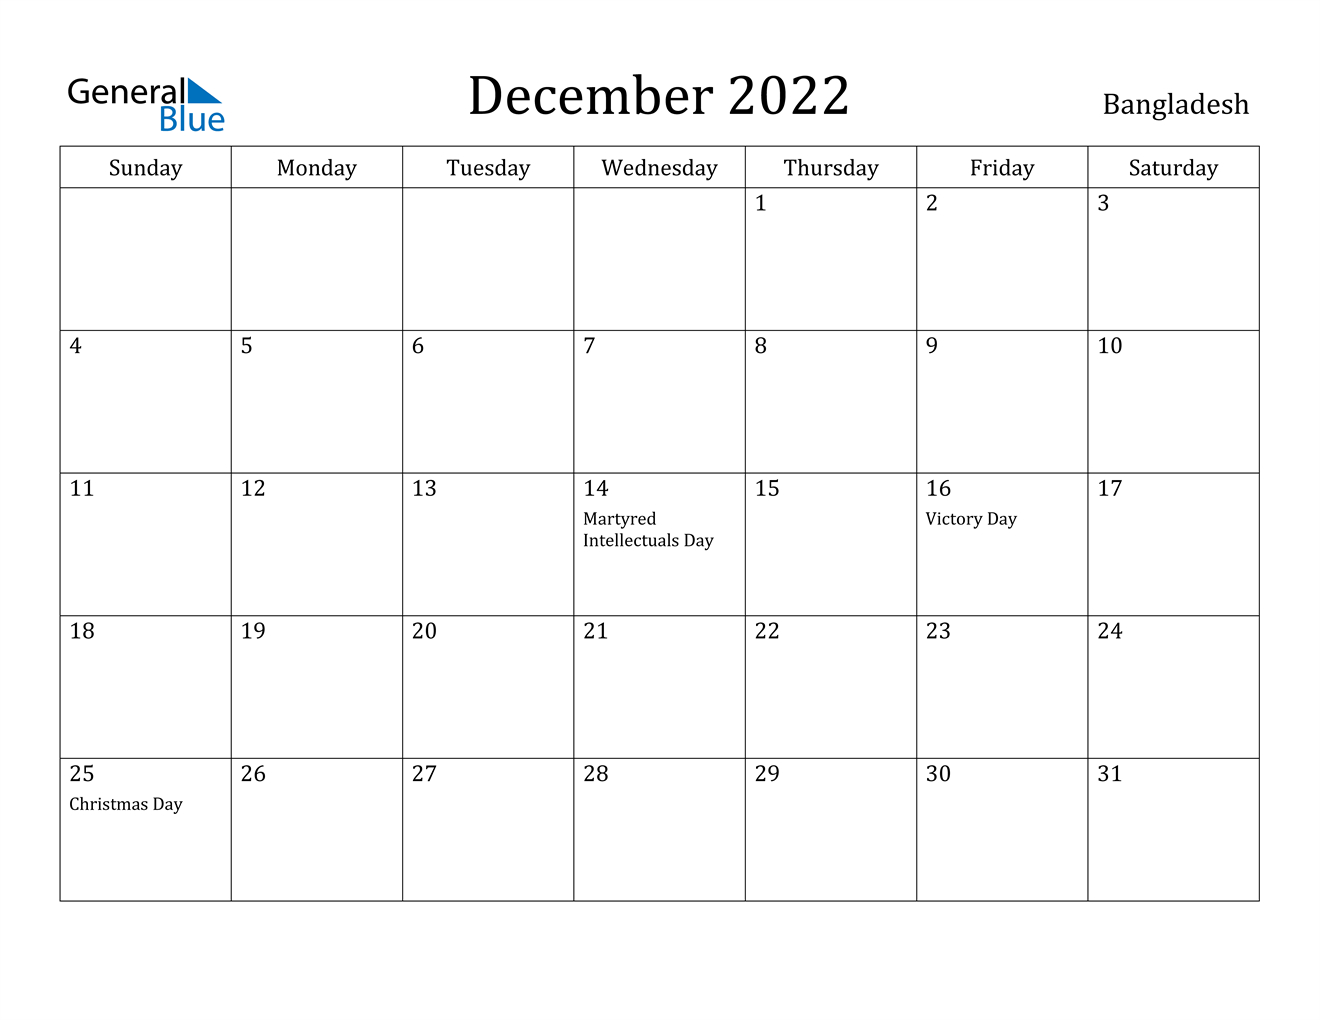 Bangladesh December 2022 Calendar With Holidays